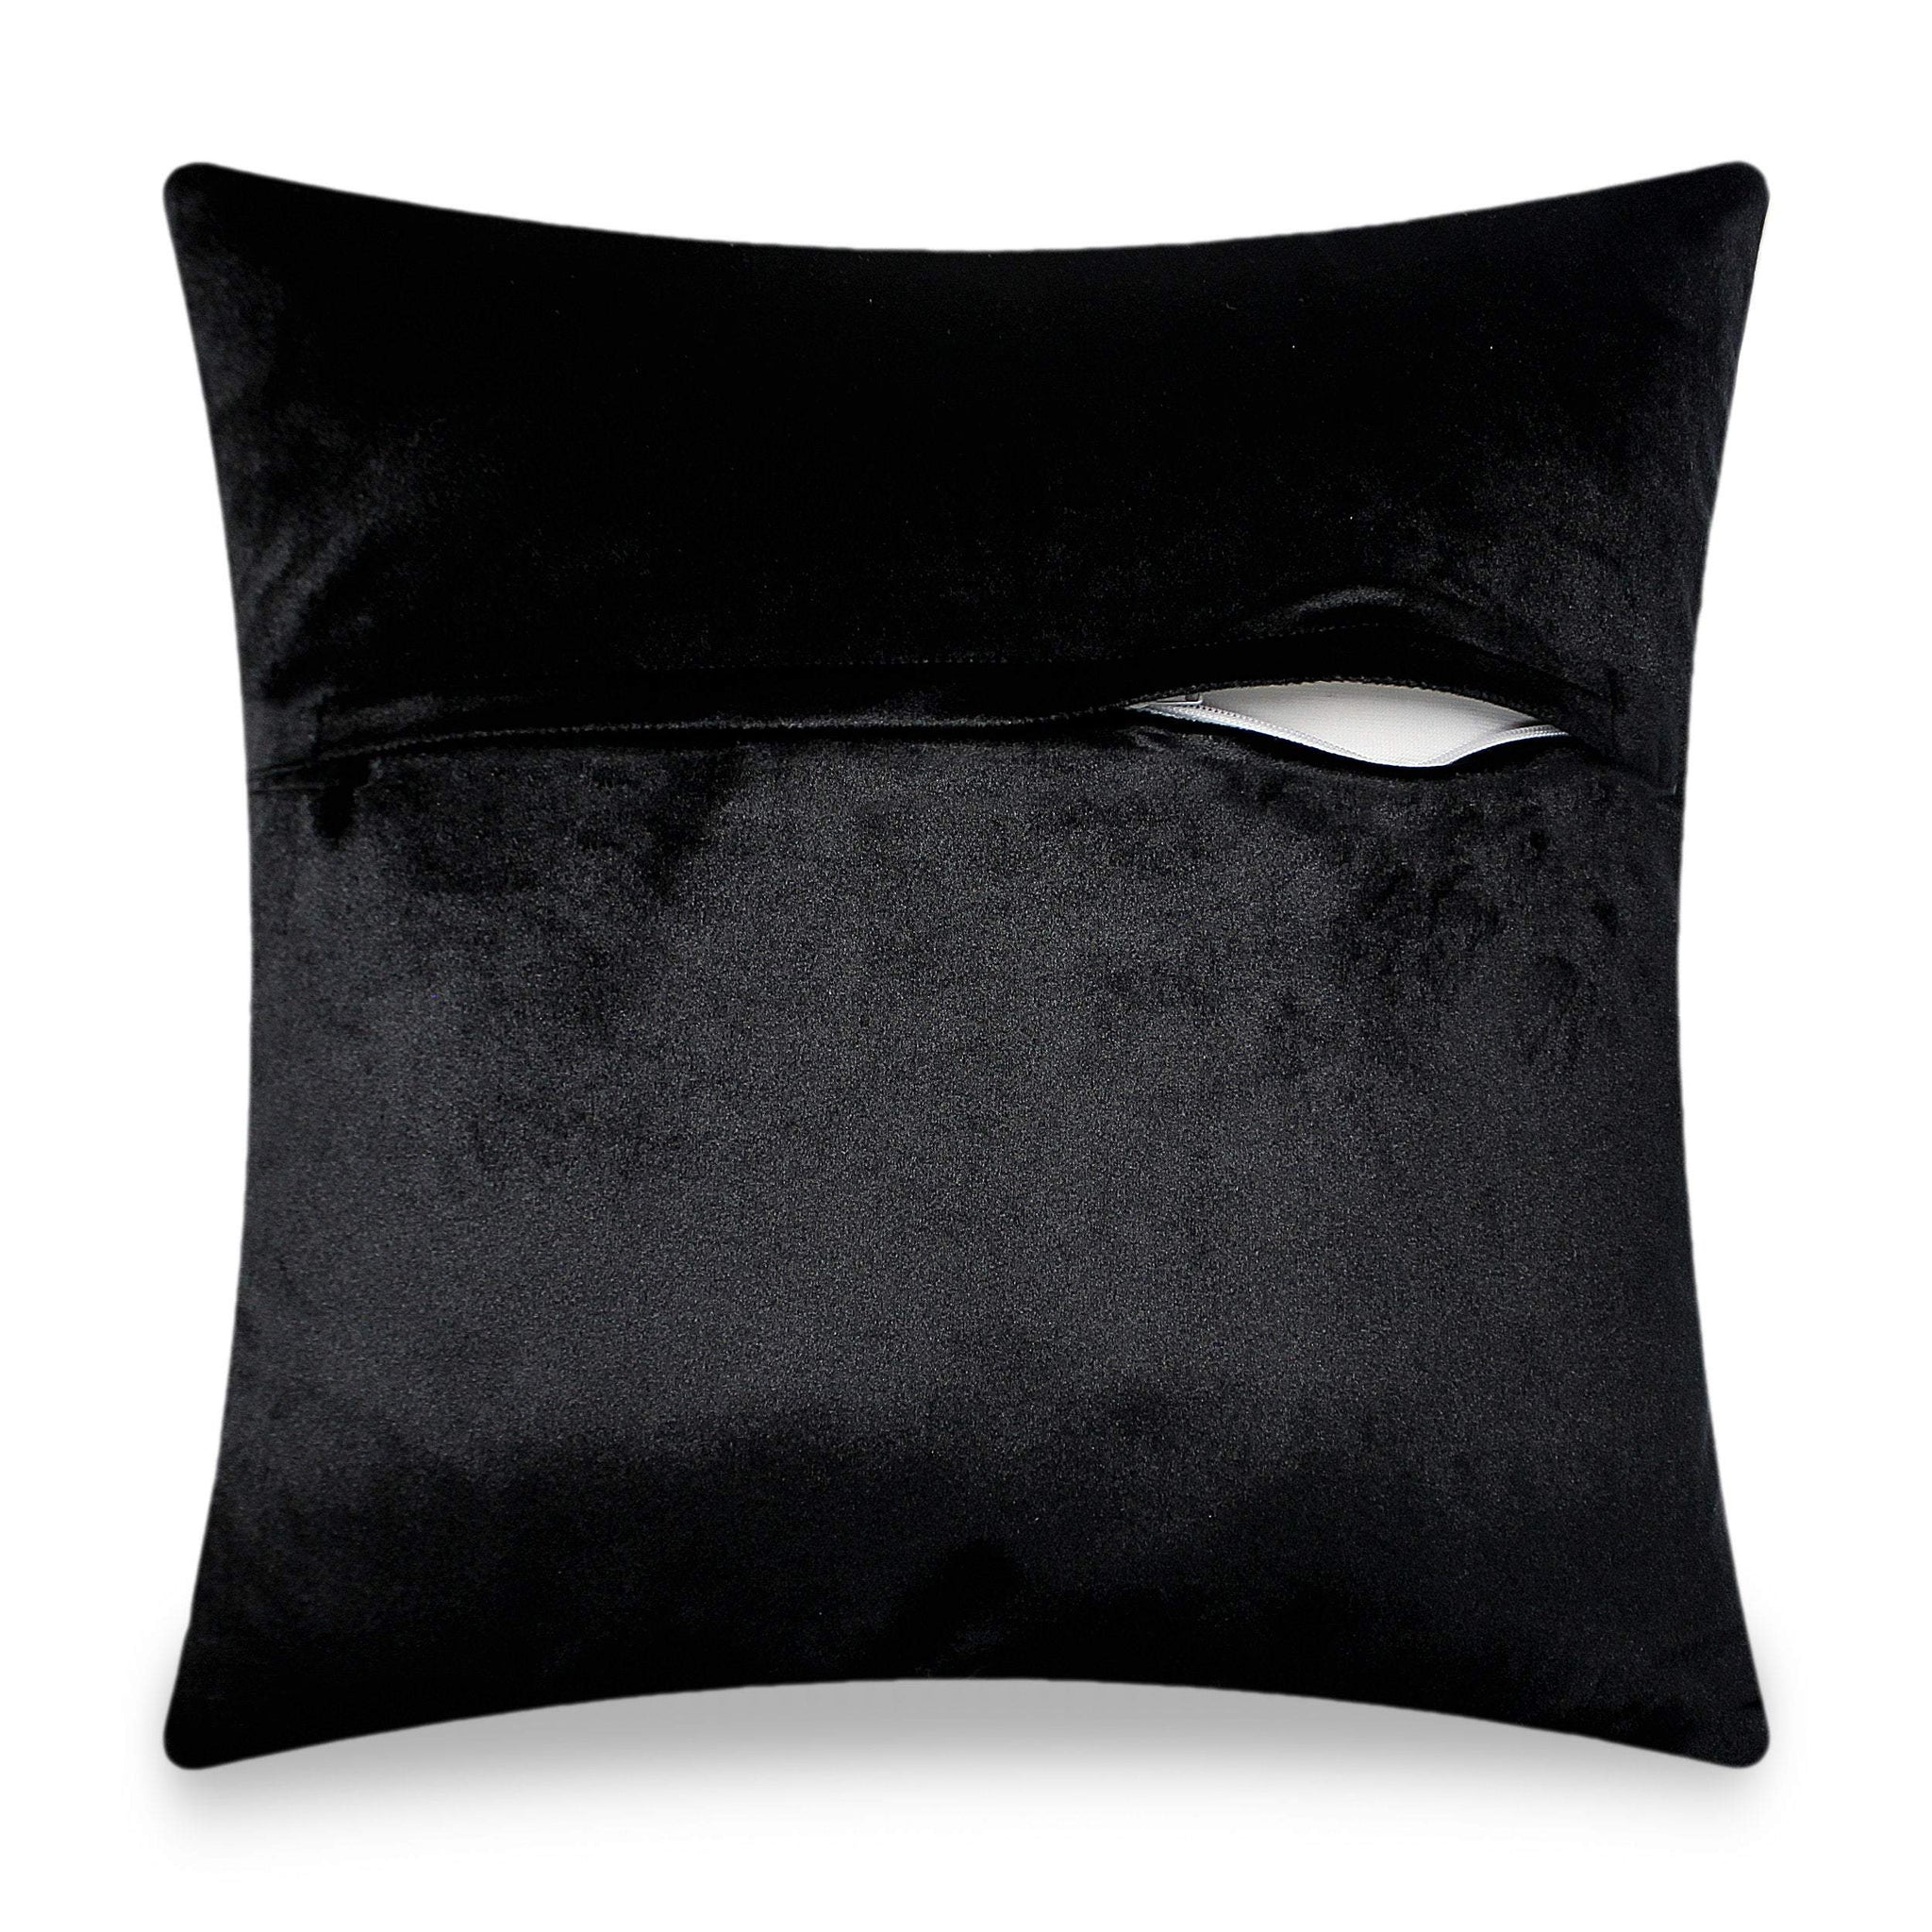 Black Luxury Baroque Style Decorative Embroidered Cushion Cover Velvet Pillow Case Home European Sofa Throw Pillow